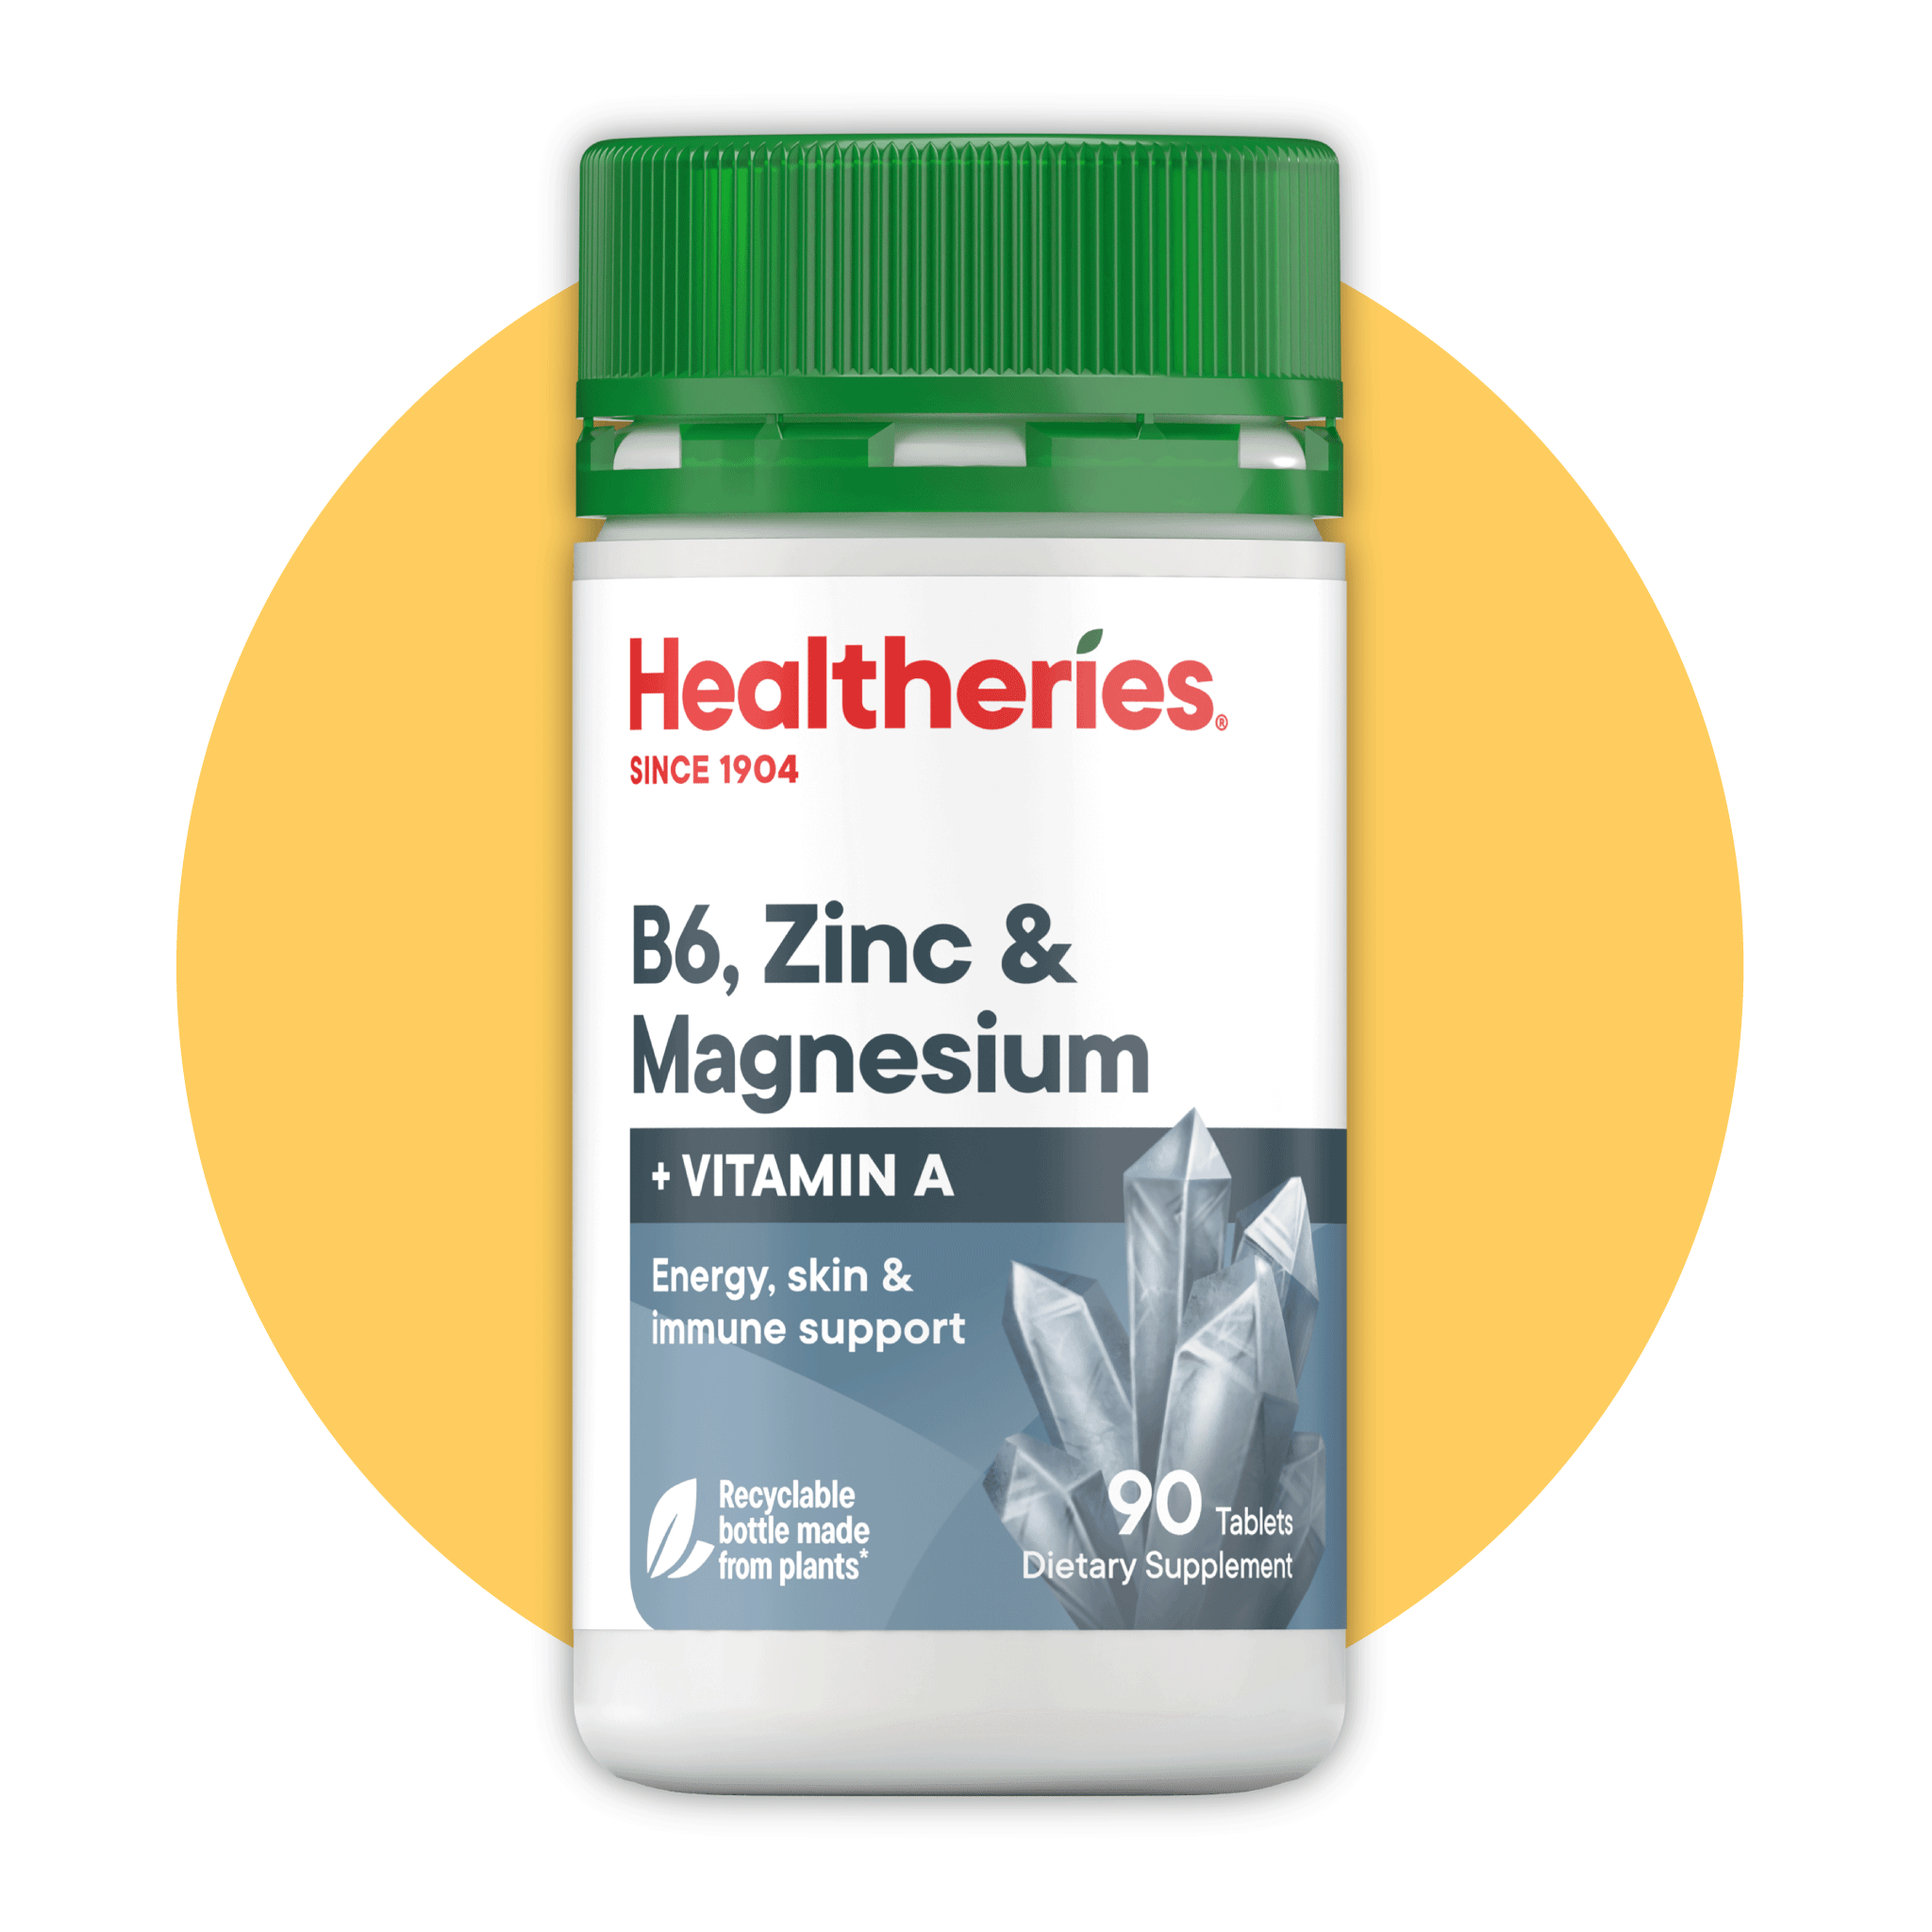 B6 Zinc & Magnesium with Vitamin A Tablets 90s - Healtheries Hong Kong